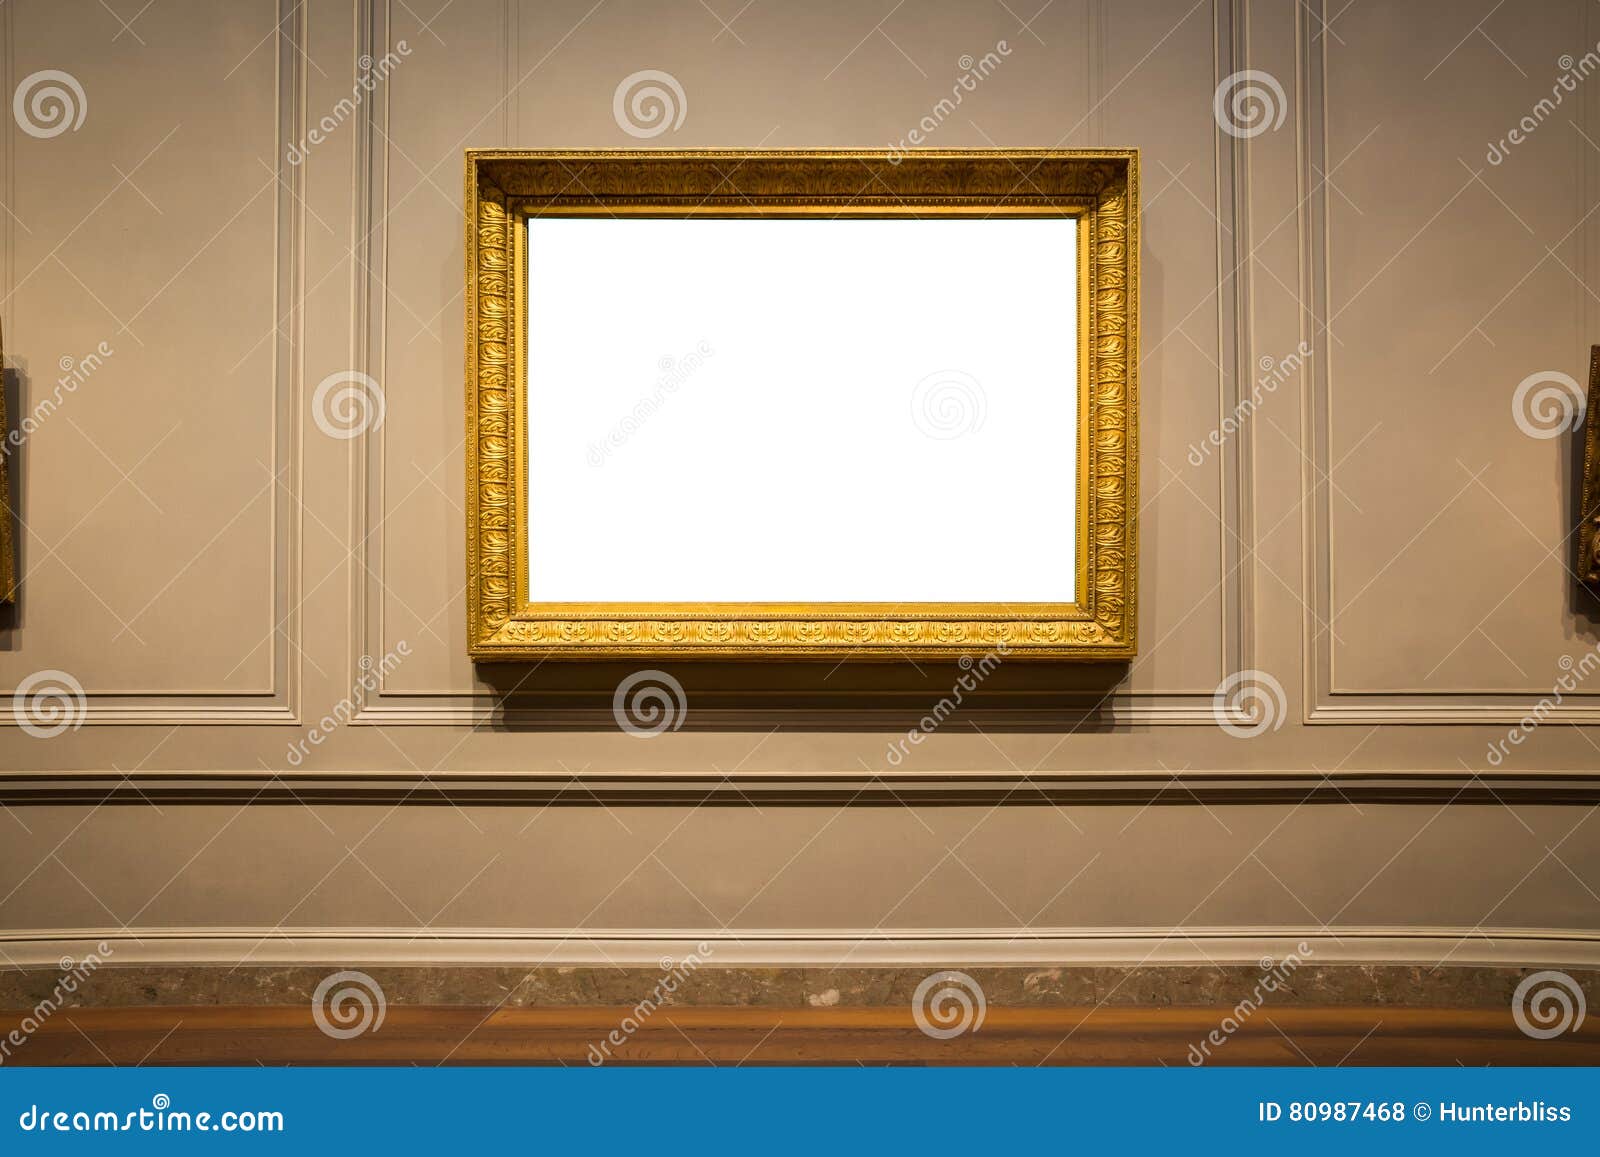 ornate picture frame art gallery museum exhibit interior white c